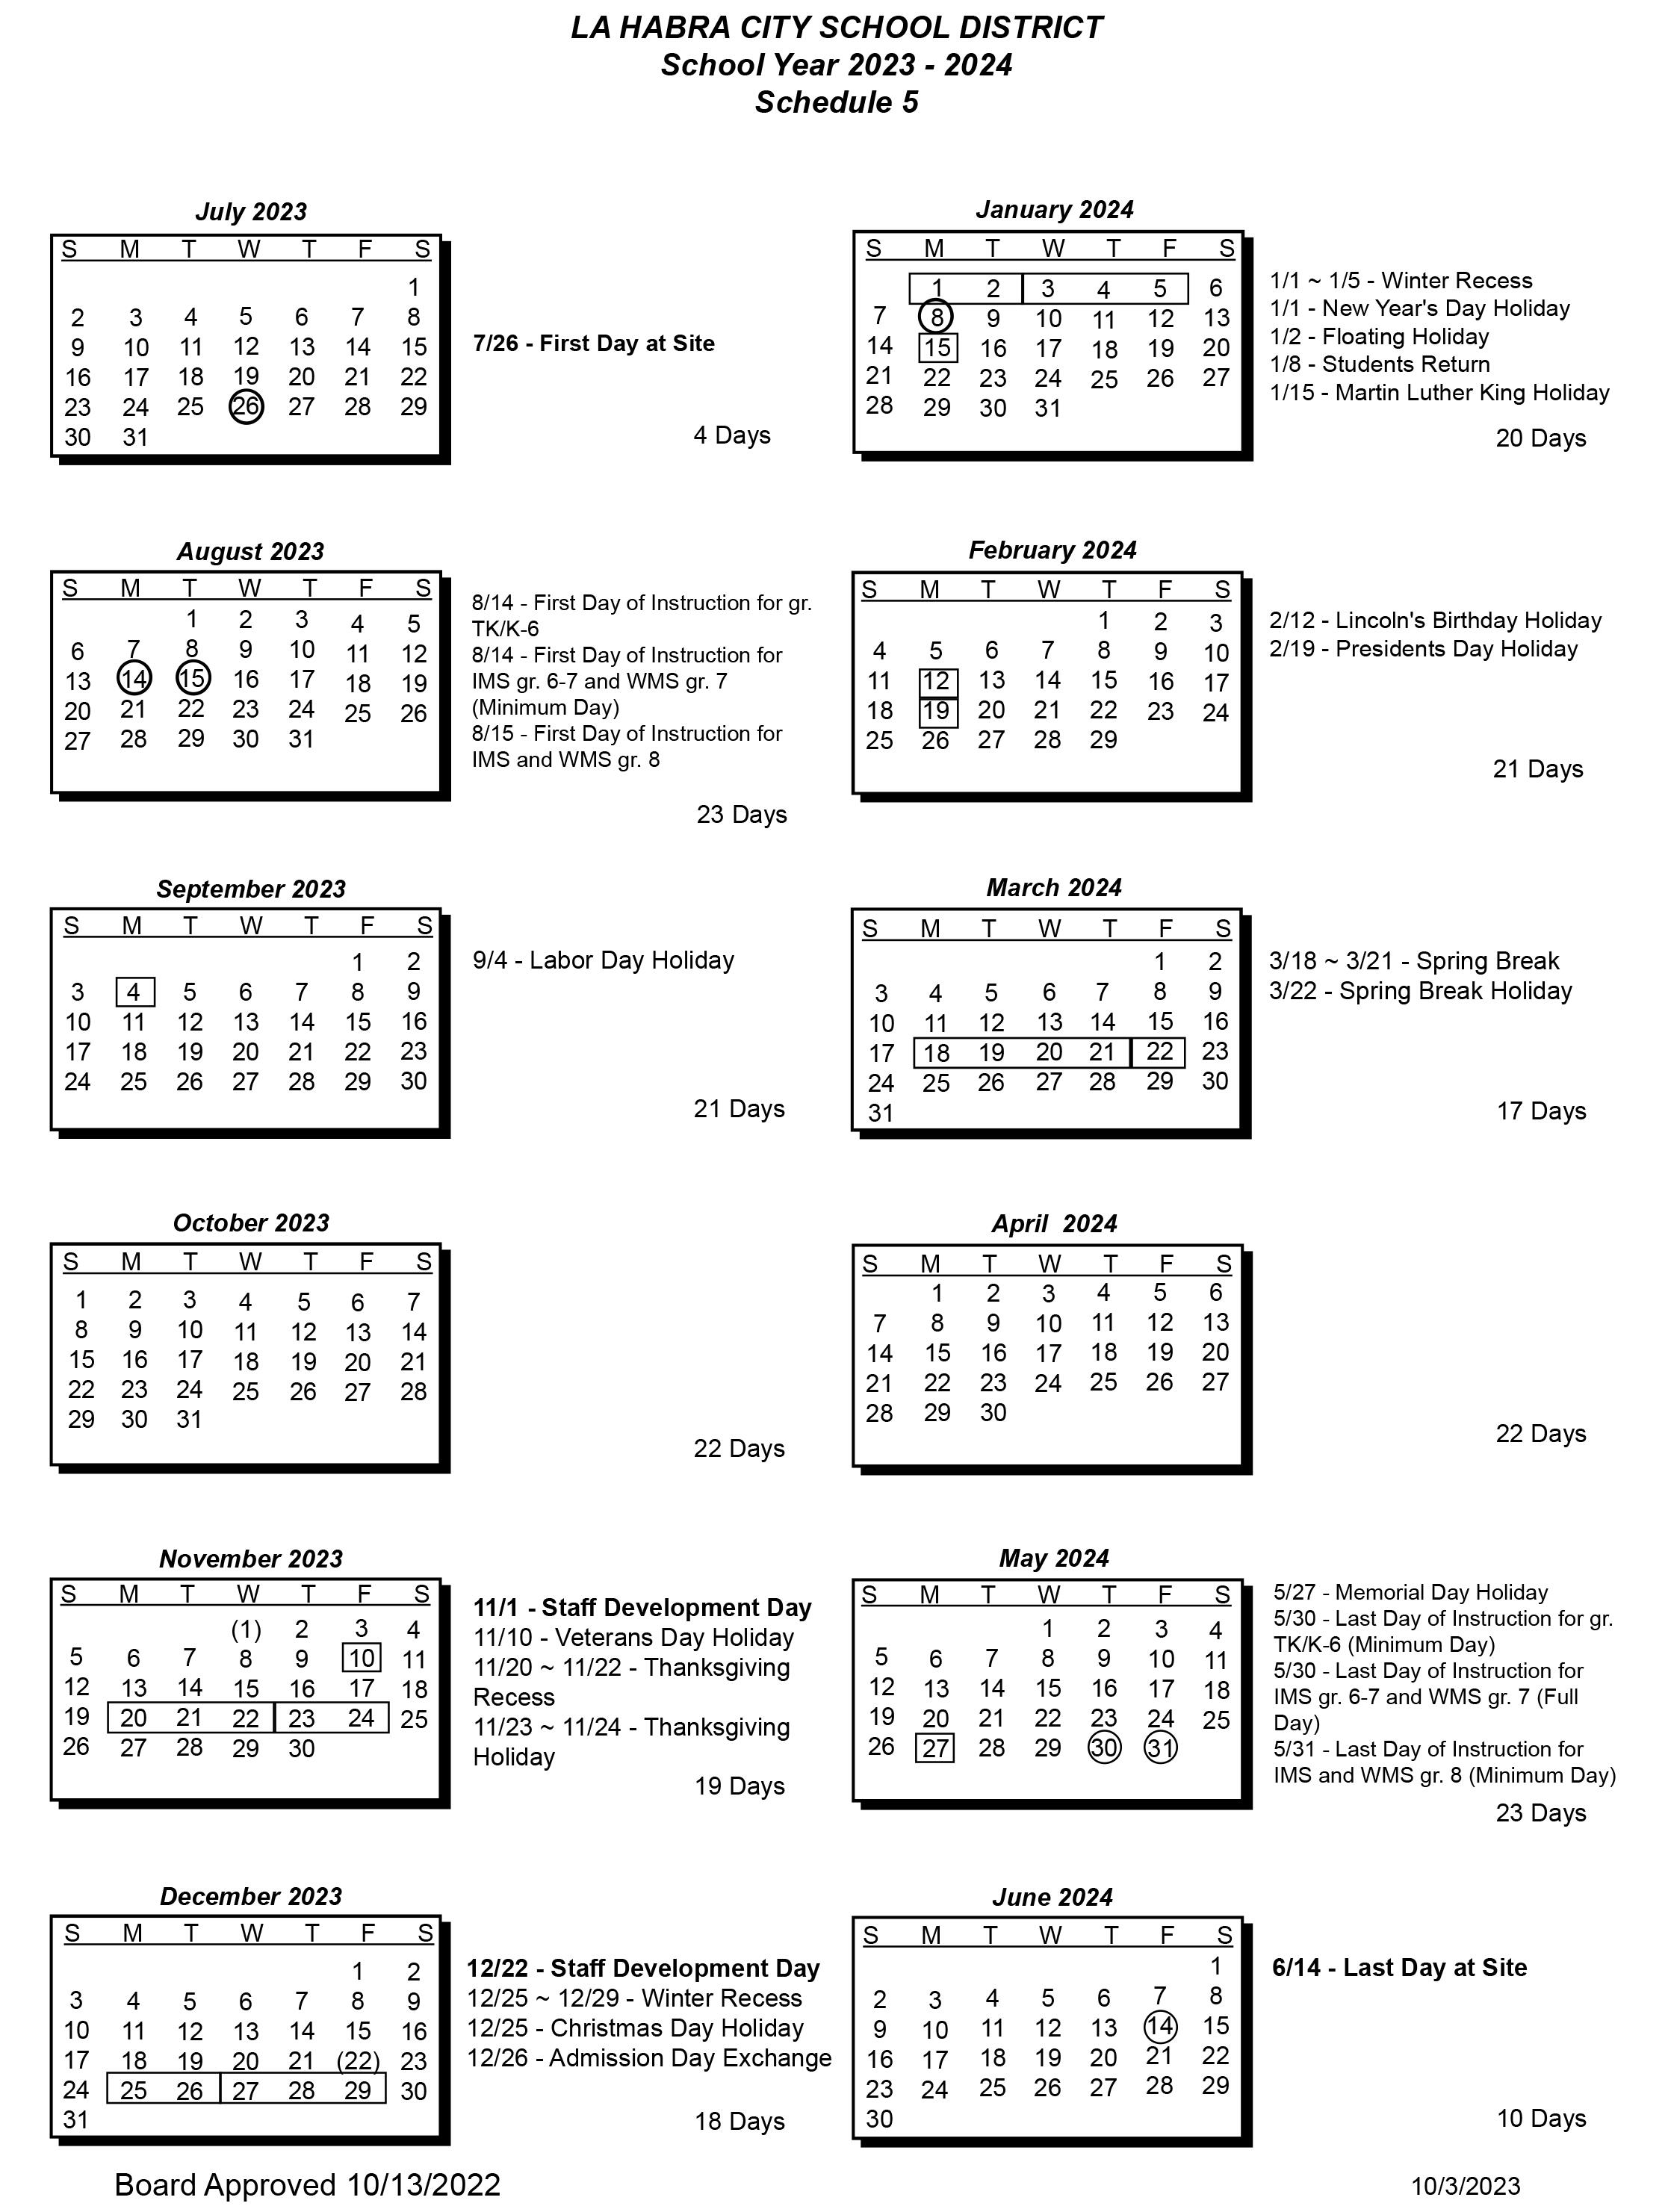 School Year Calendar Schedule 5